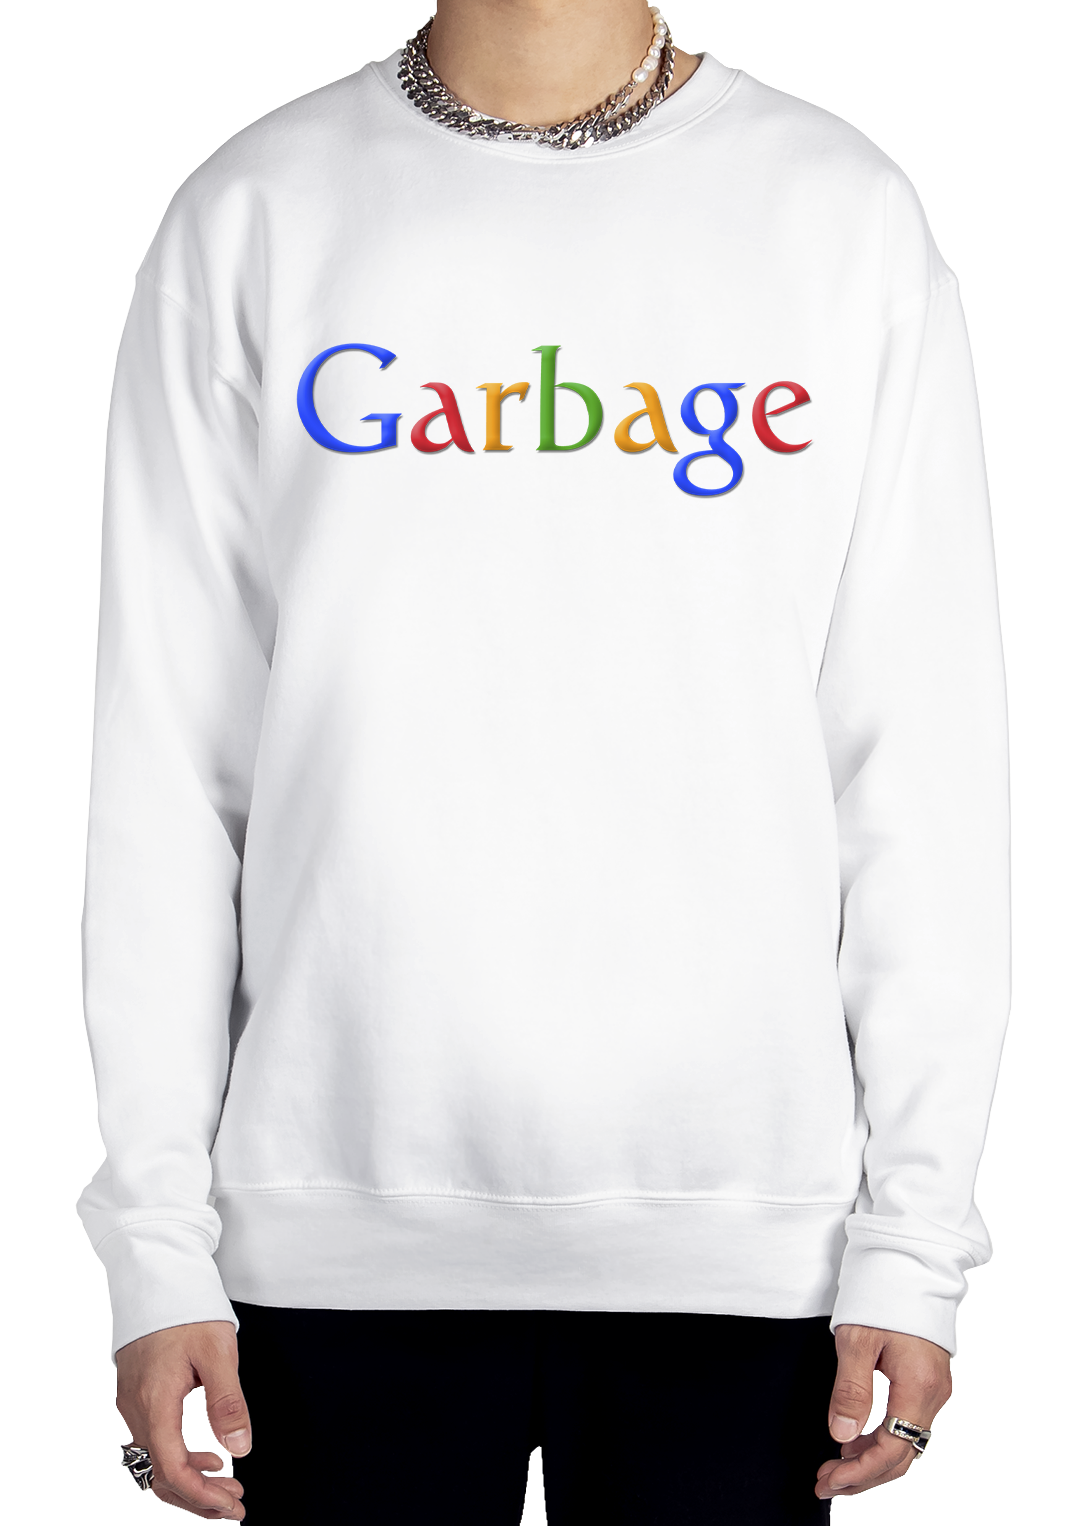 Garbage.com Sweatshirt